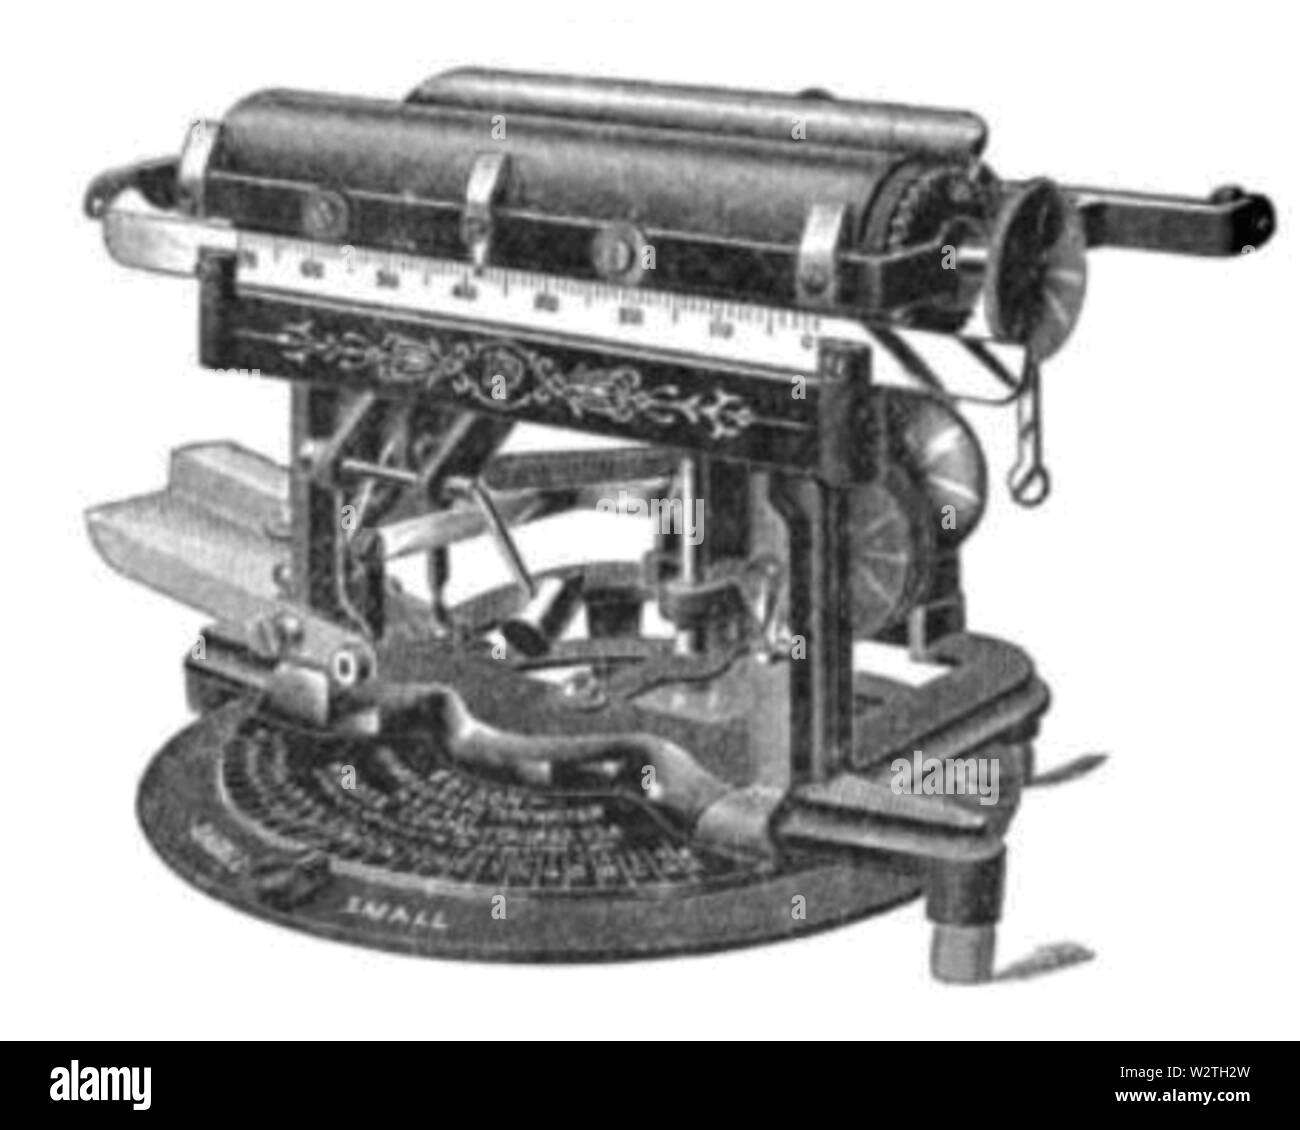 Mimeograph machine, stencil duplicator. Stock Photo by ©Jiovani 28698579